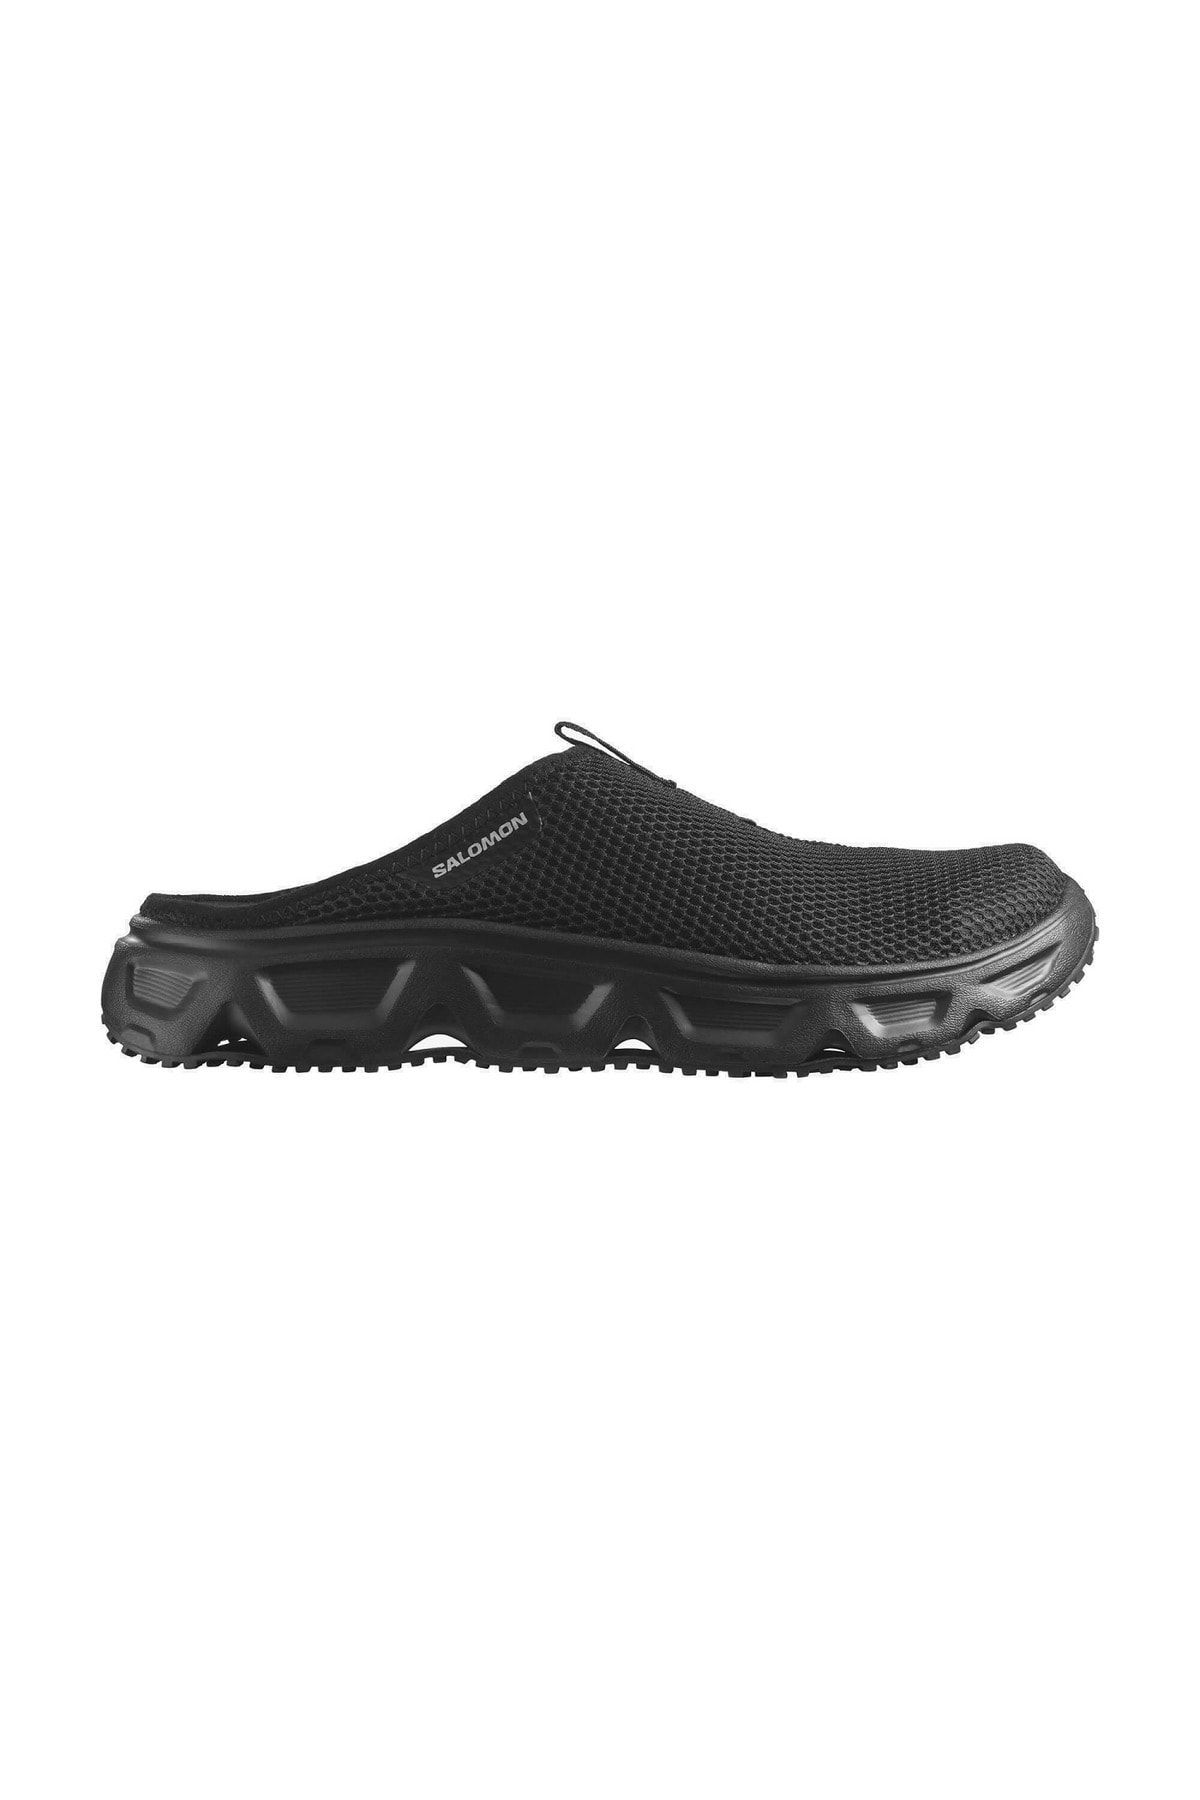 Salomon Reelax Slide 6.0 Outdoor Sandalet Ayakkabı L47112000